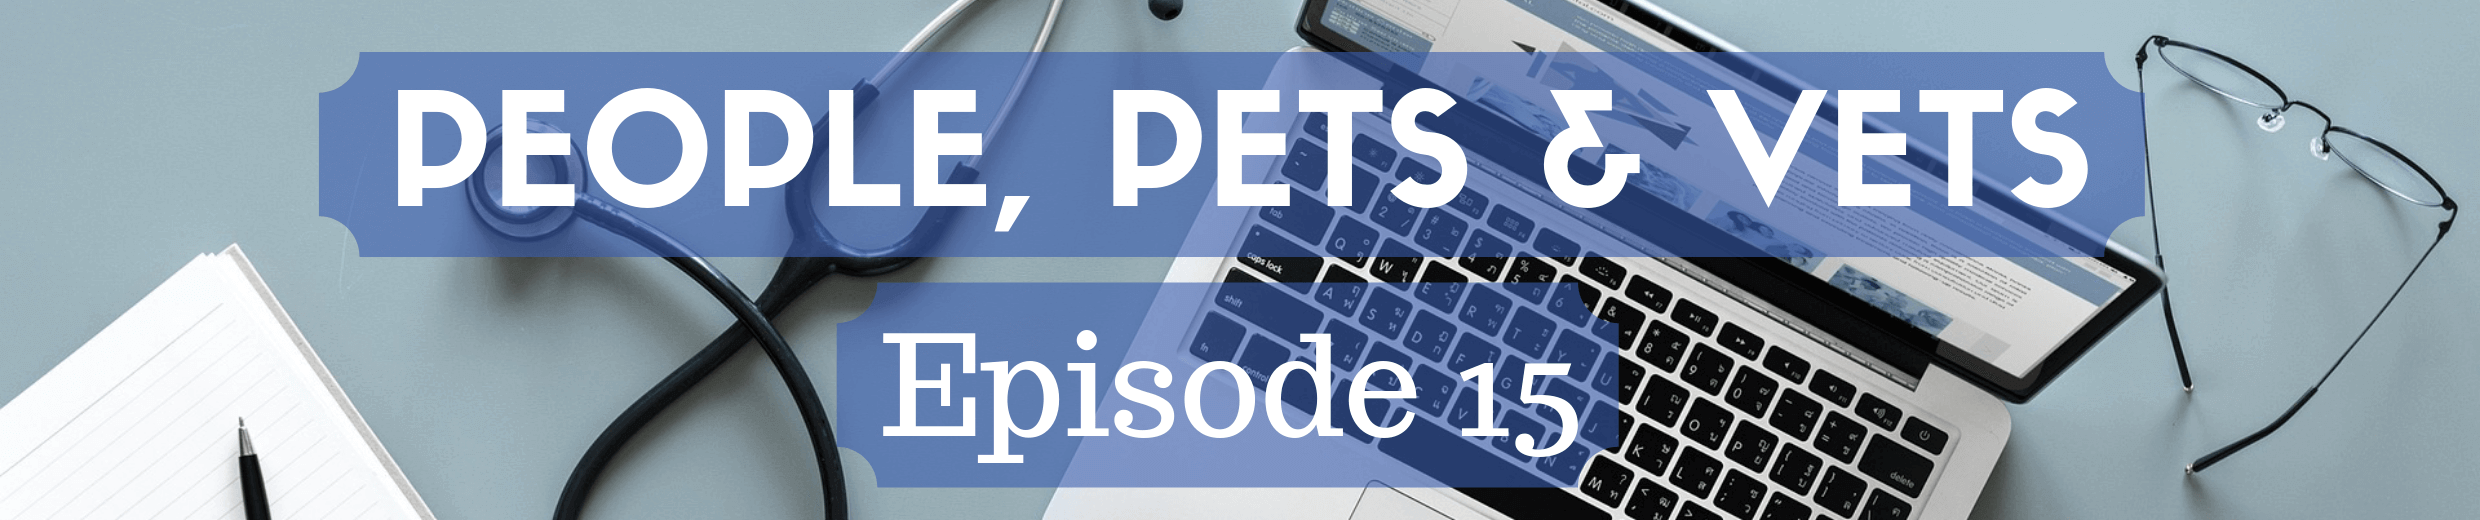 People, Pets & Vets: Episode 15